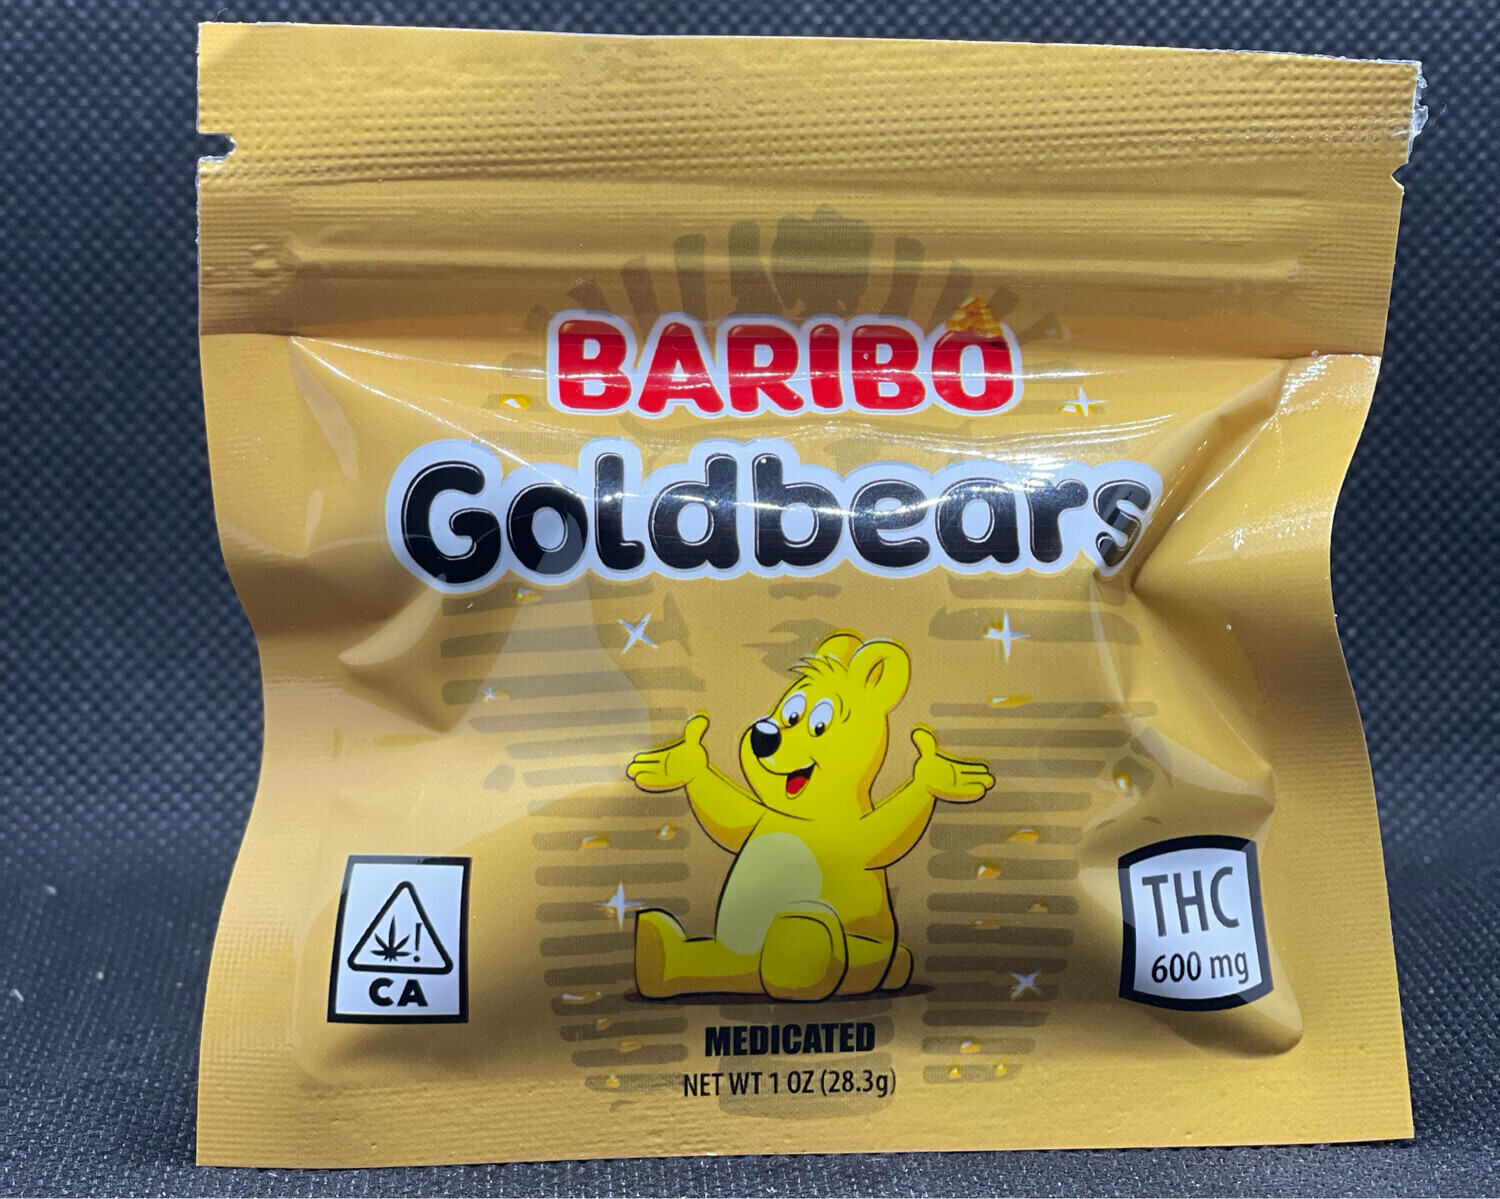 Baribo Goldbears 600 MG